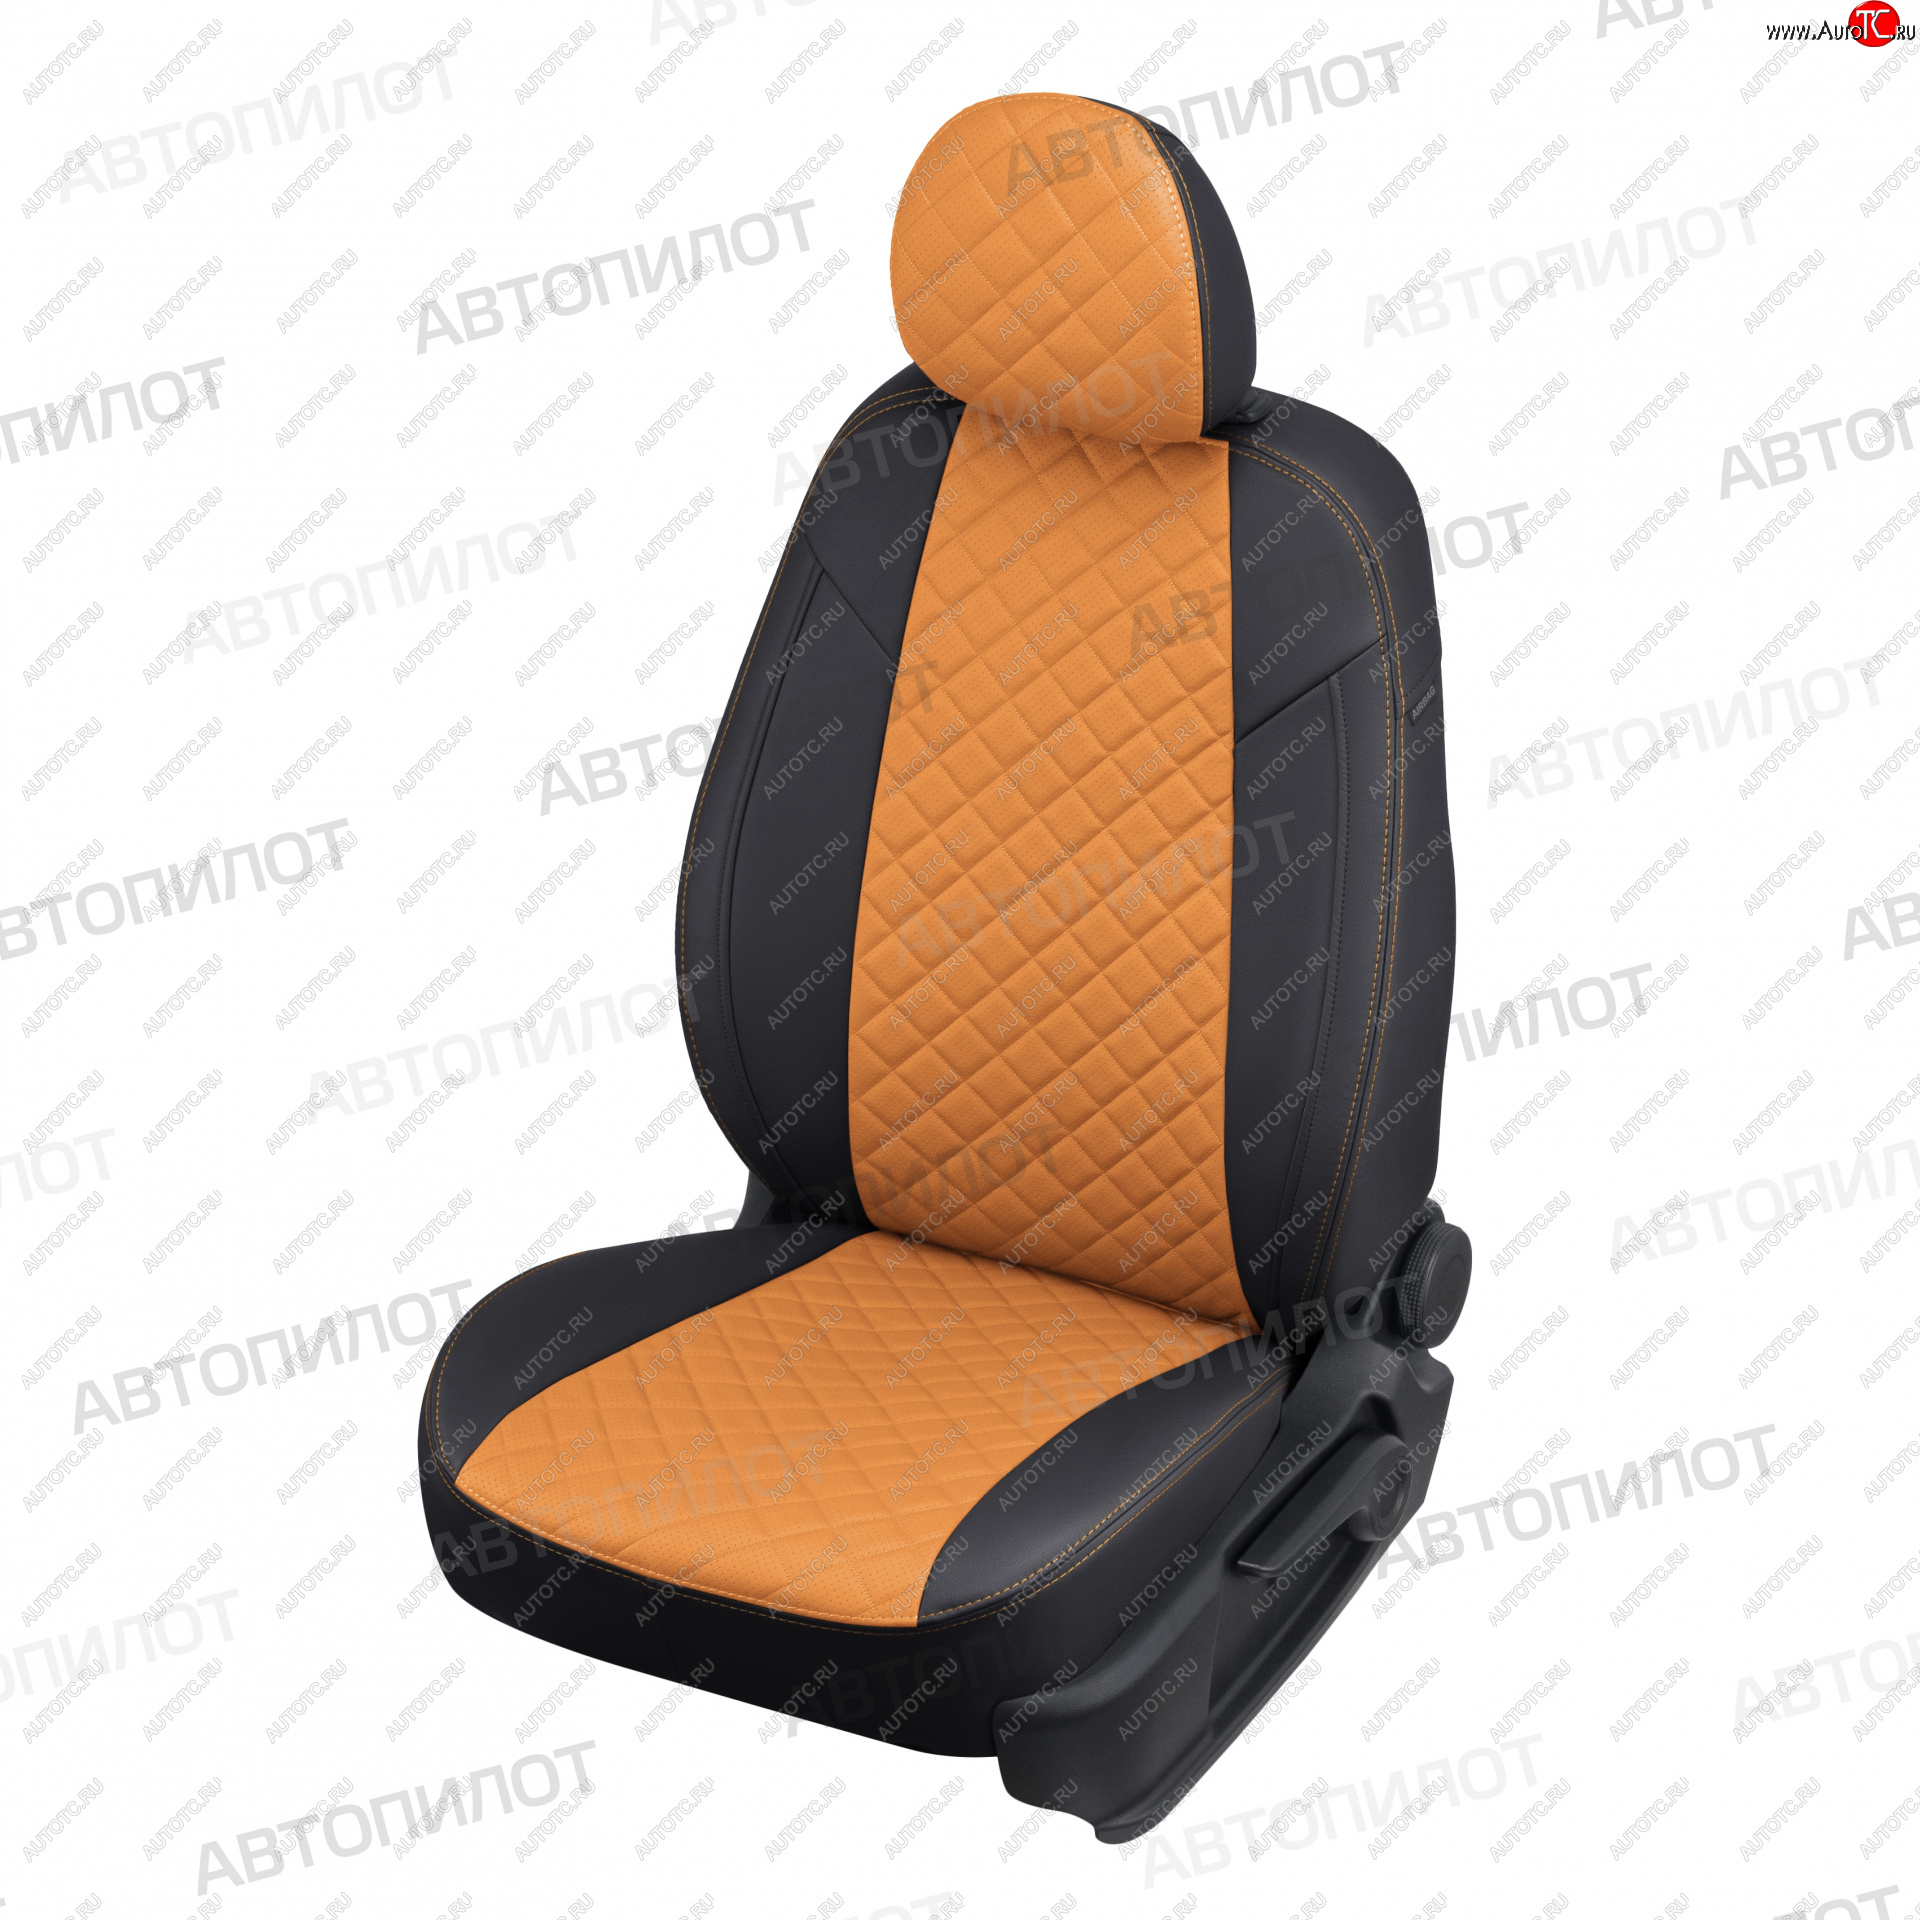 13 999 р. Чехлы сидений (экокожа) Автопилот Ромб  Chery Kimo  A1 (2008-2014) (черный/оранж)